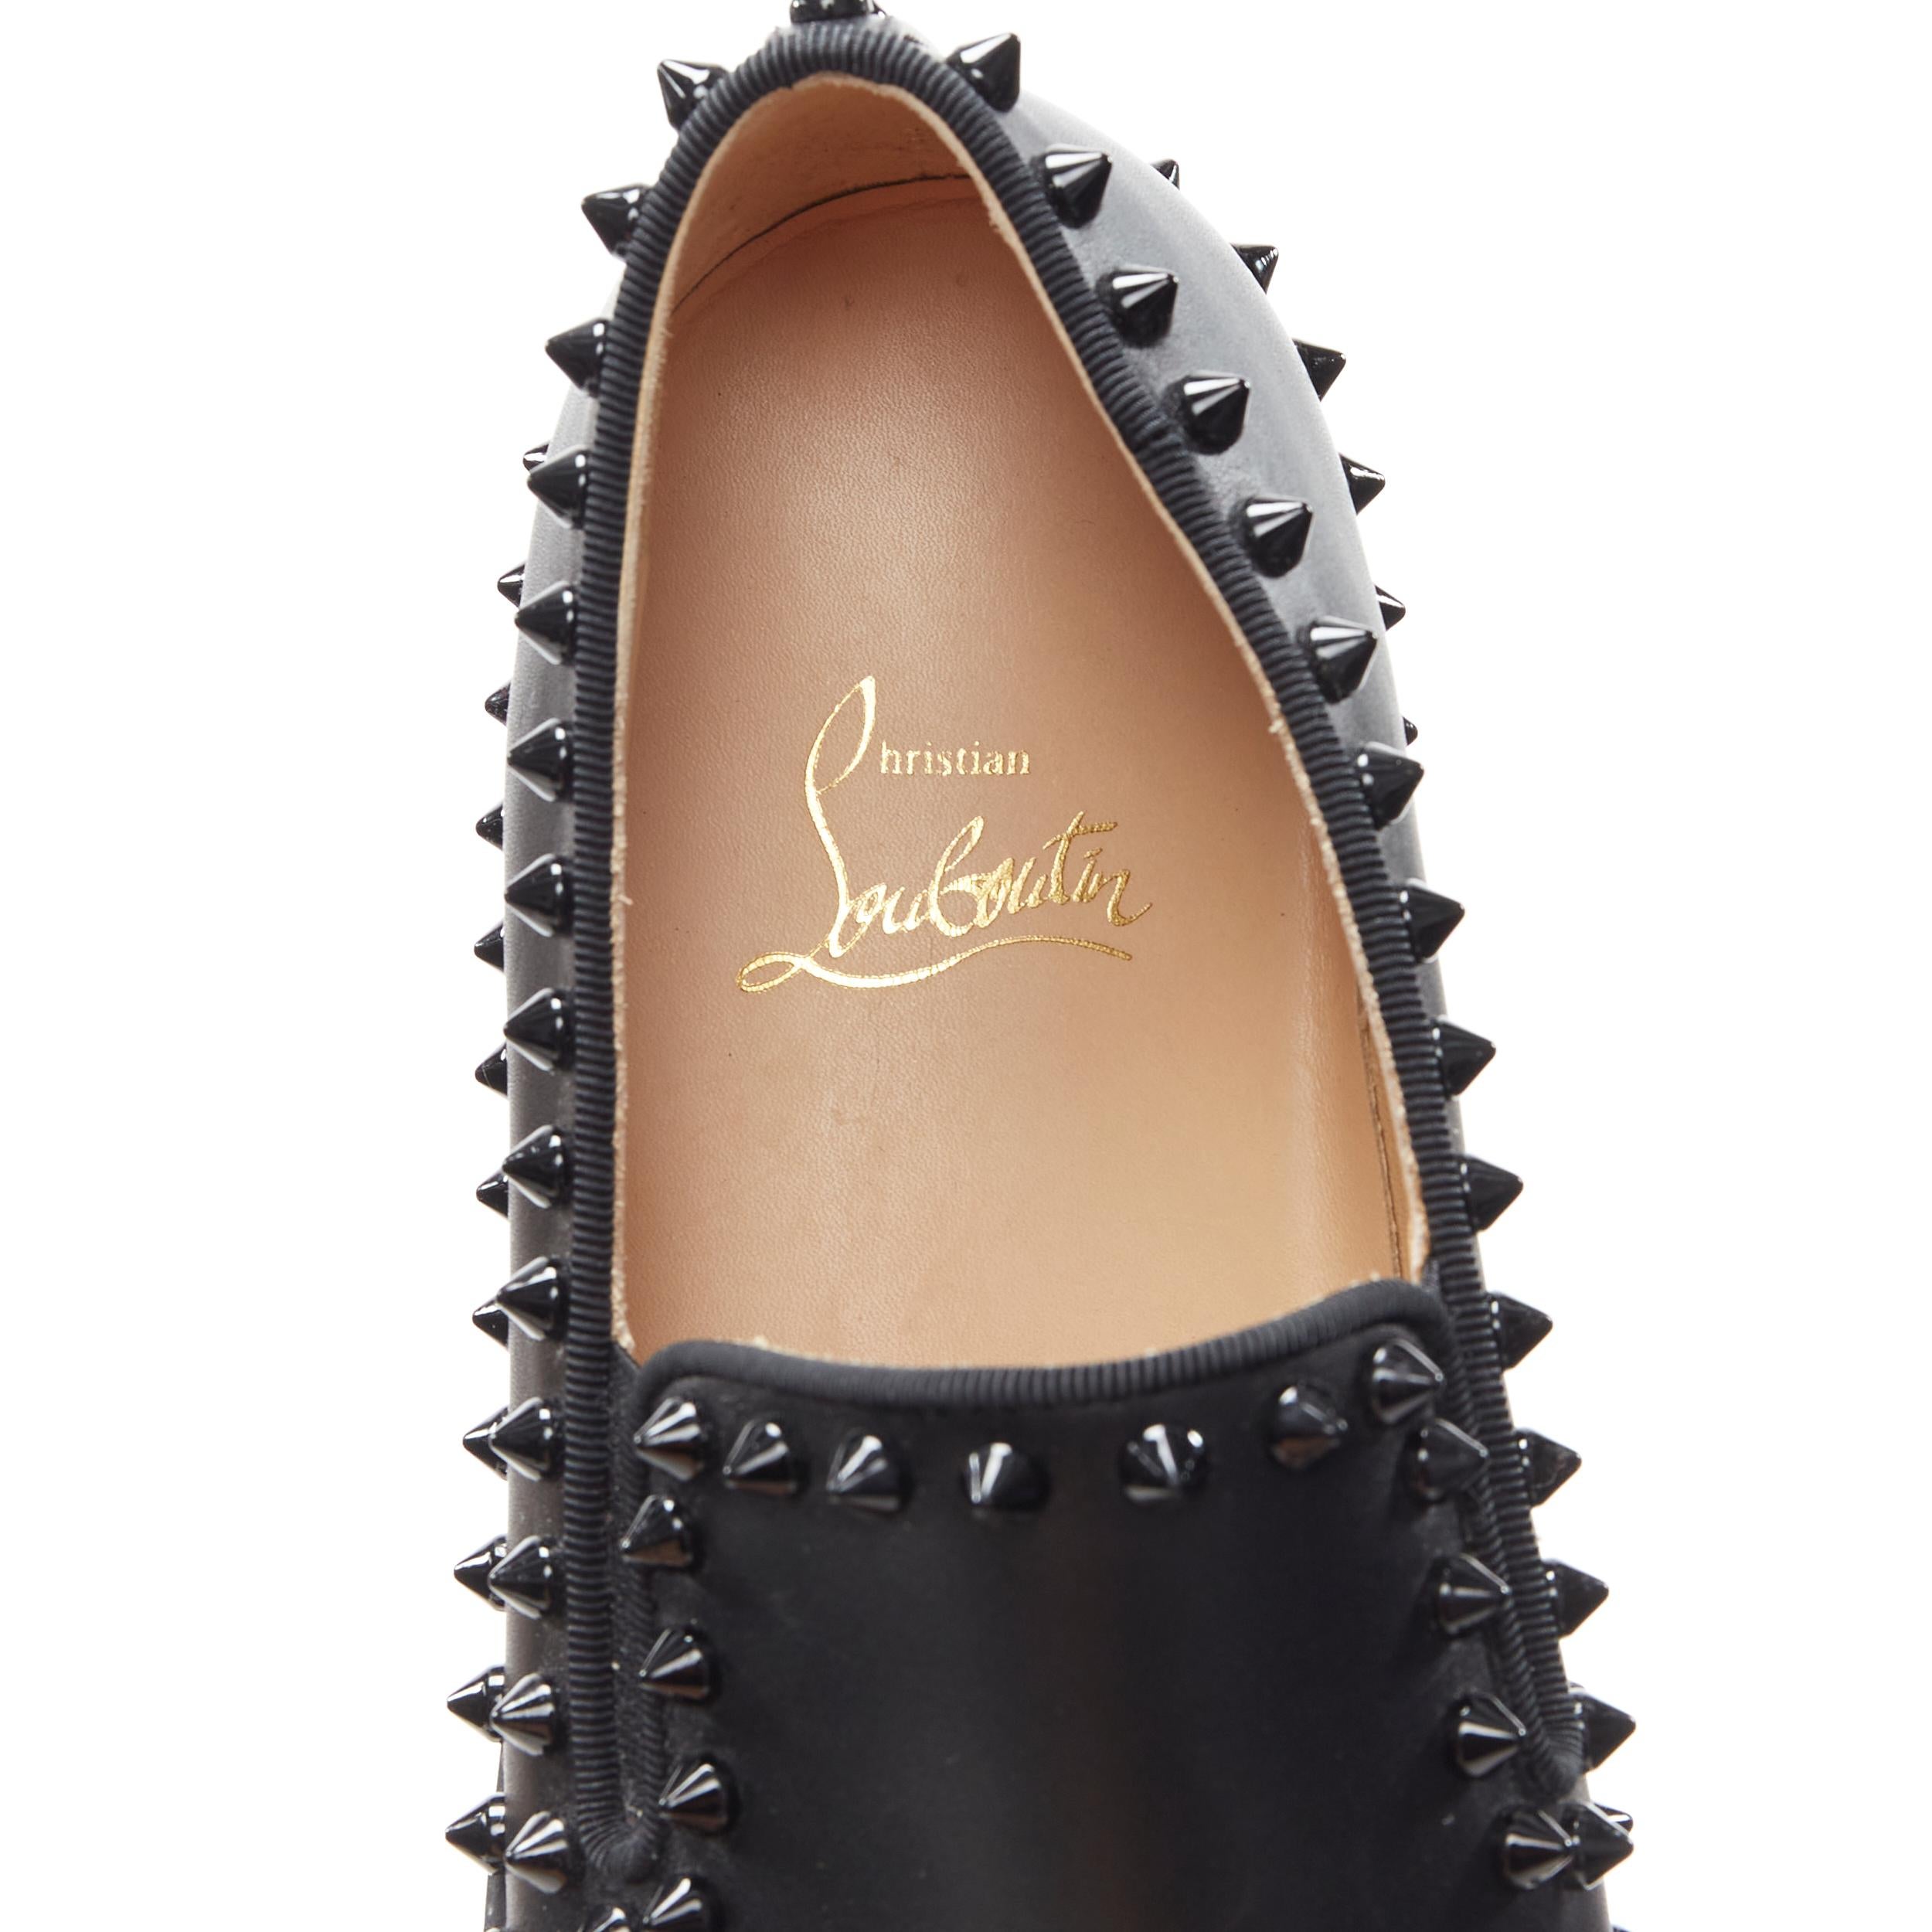 CHRISTIAN LOUBOUTIN Black leather spike stud embellished low top sneakers EU37 4